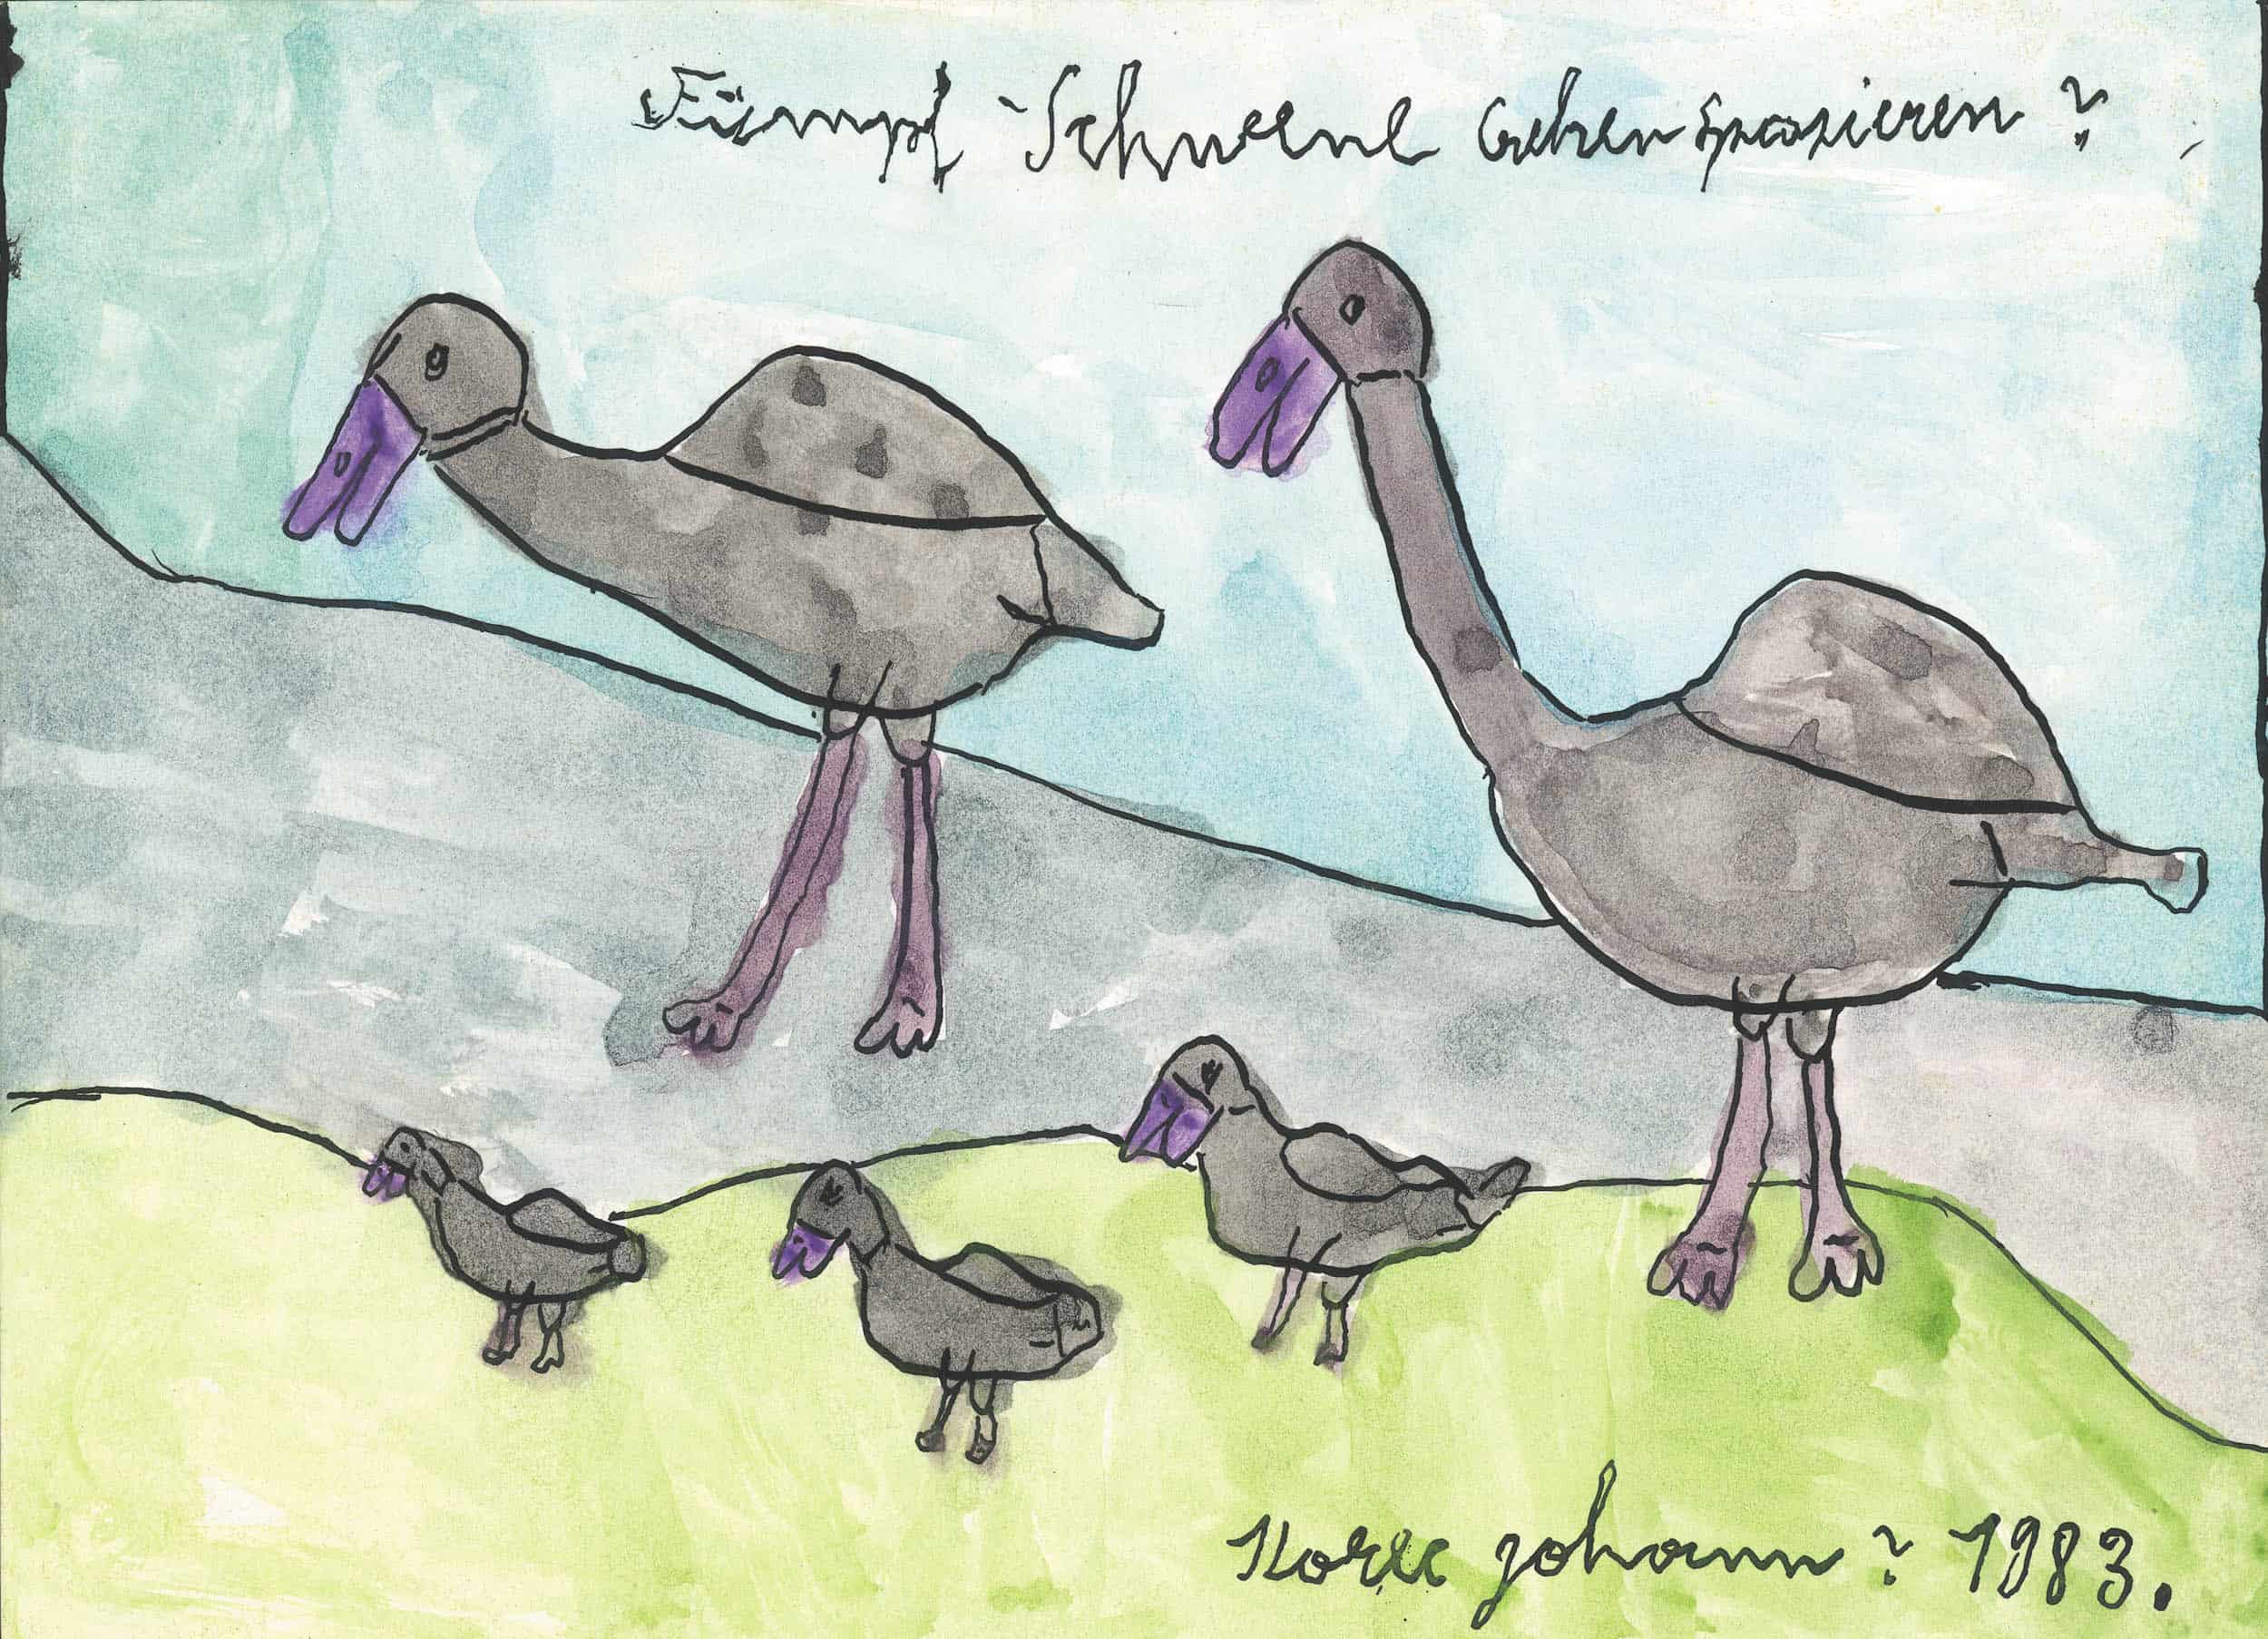 korec johann - Fünpf-Schwene gehen spazieren? / Five swans go for a walk?